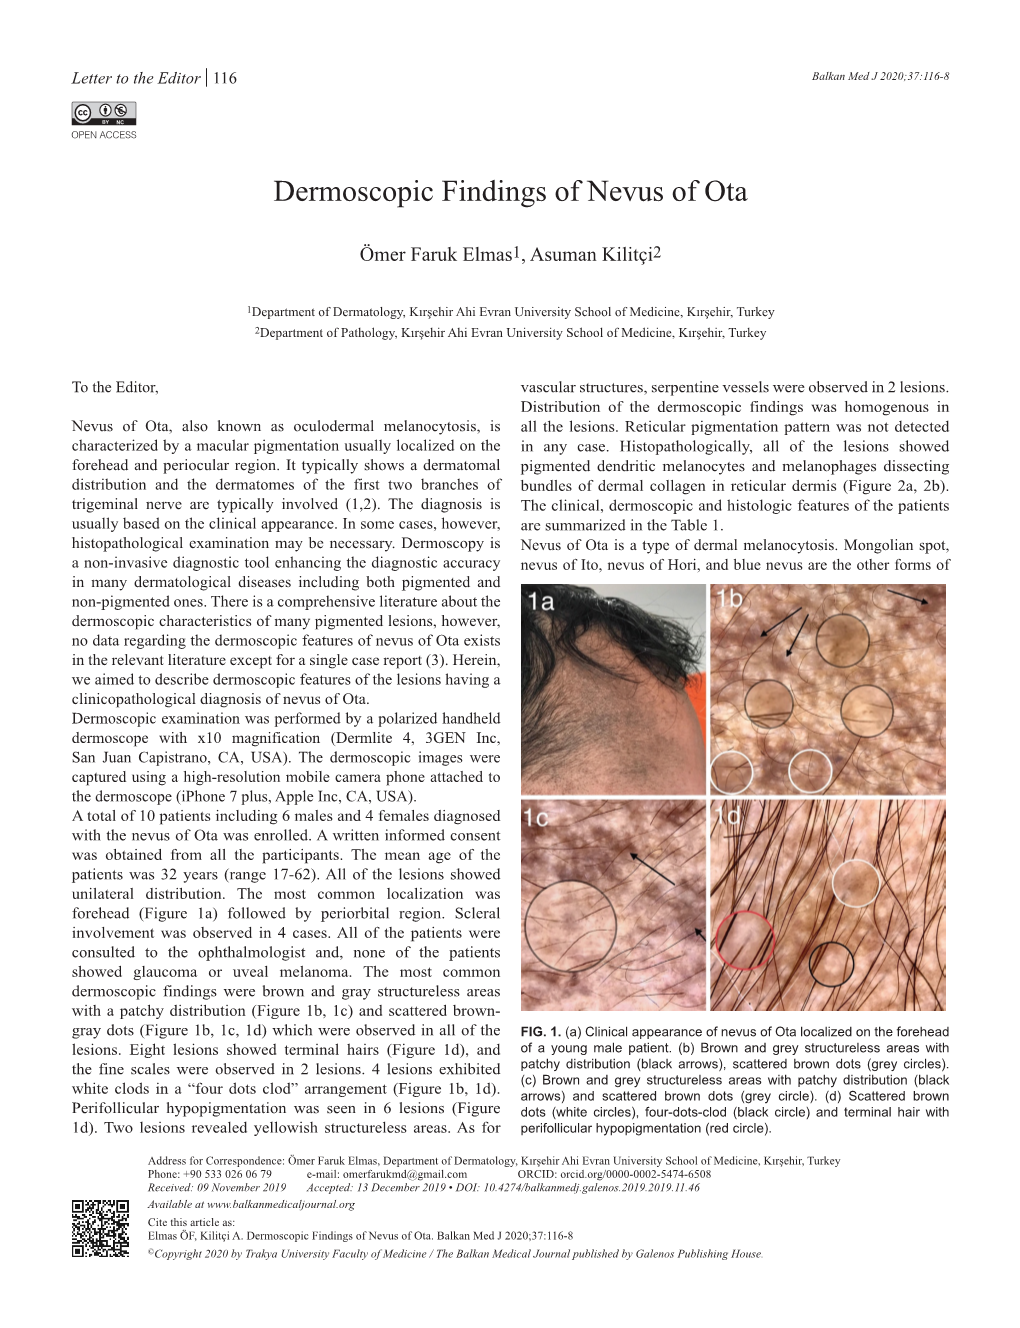 Dermoscopic Findings of Nevus of Ota